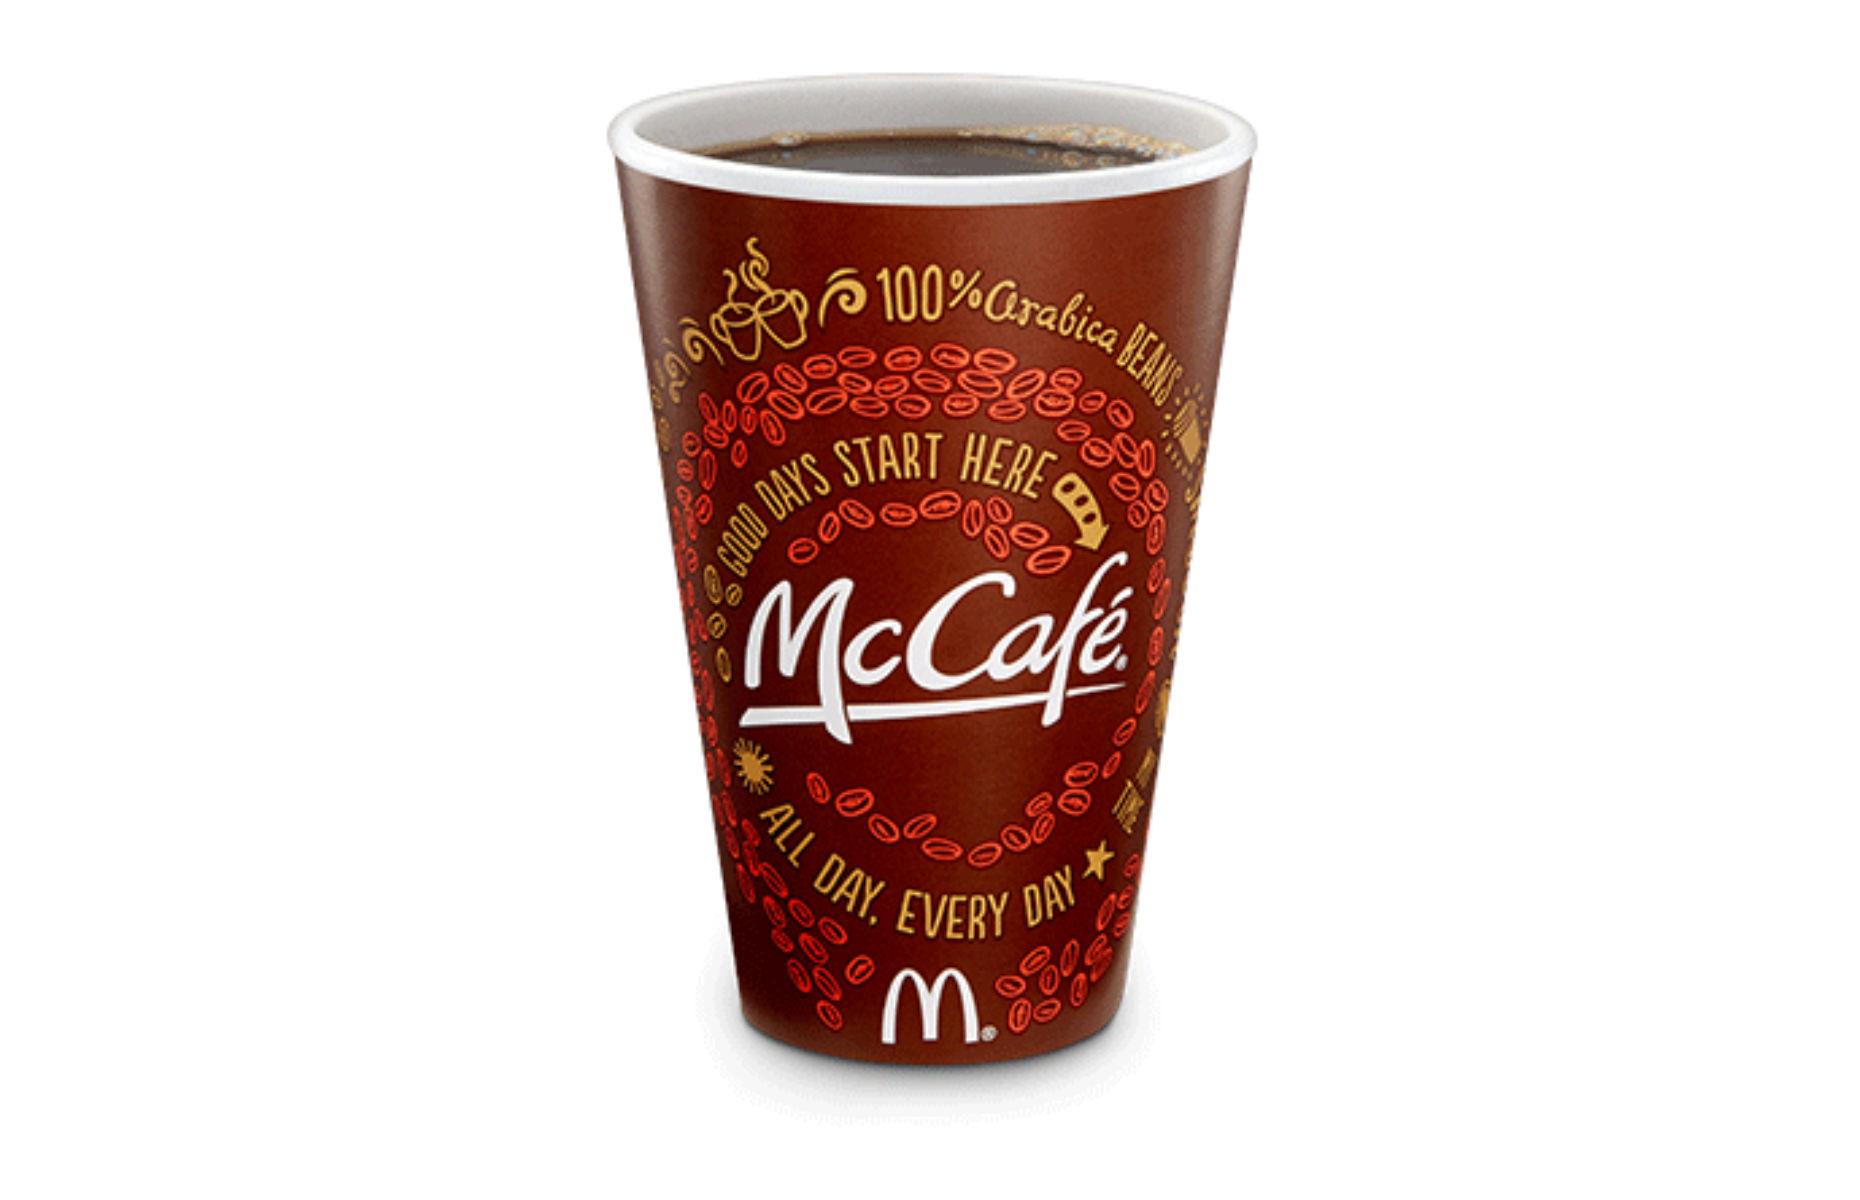 Get your caffeine fix at McDonald’s